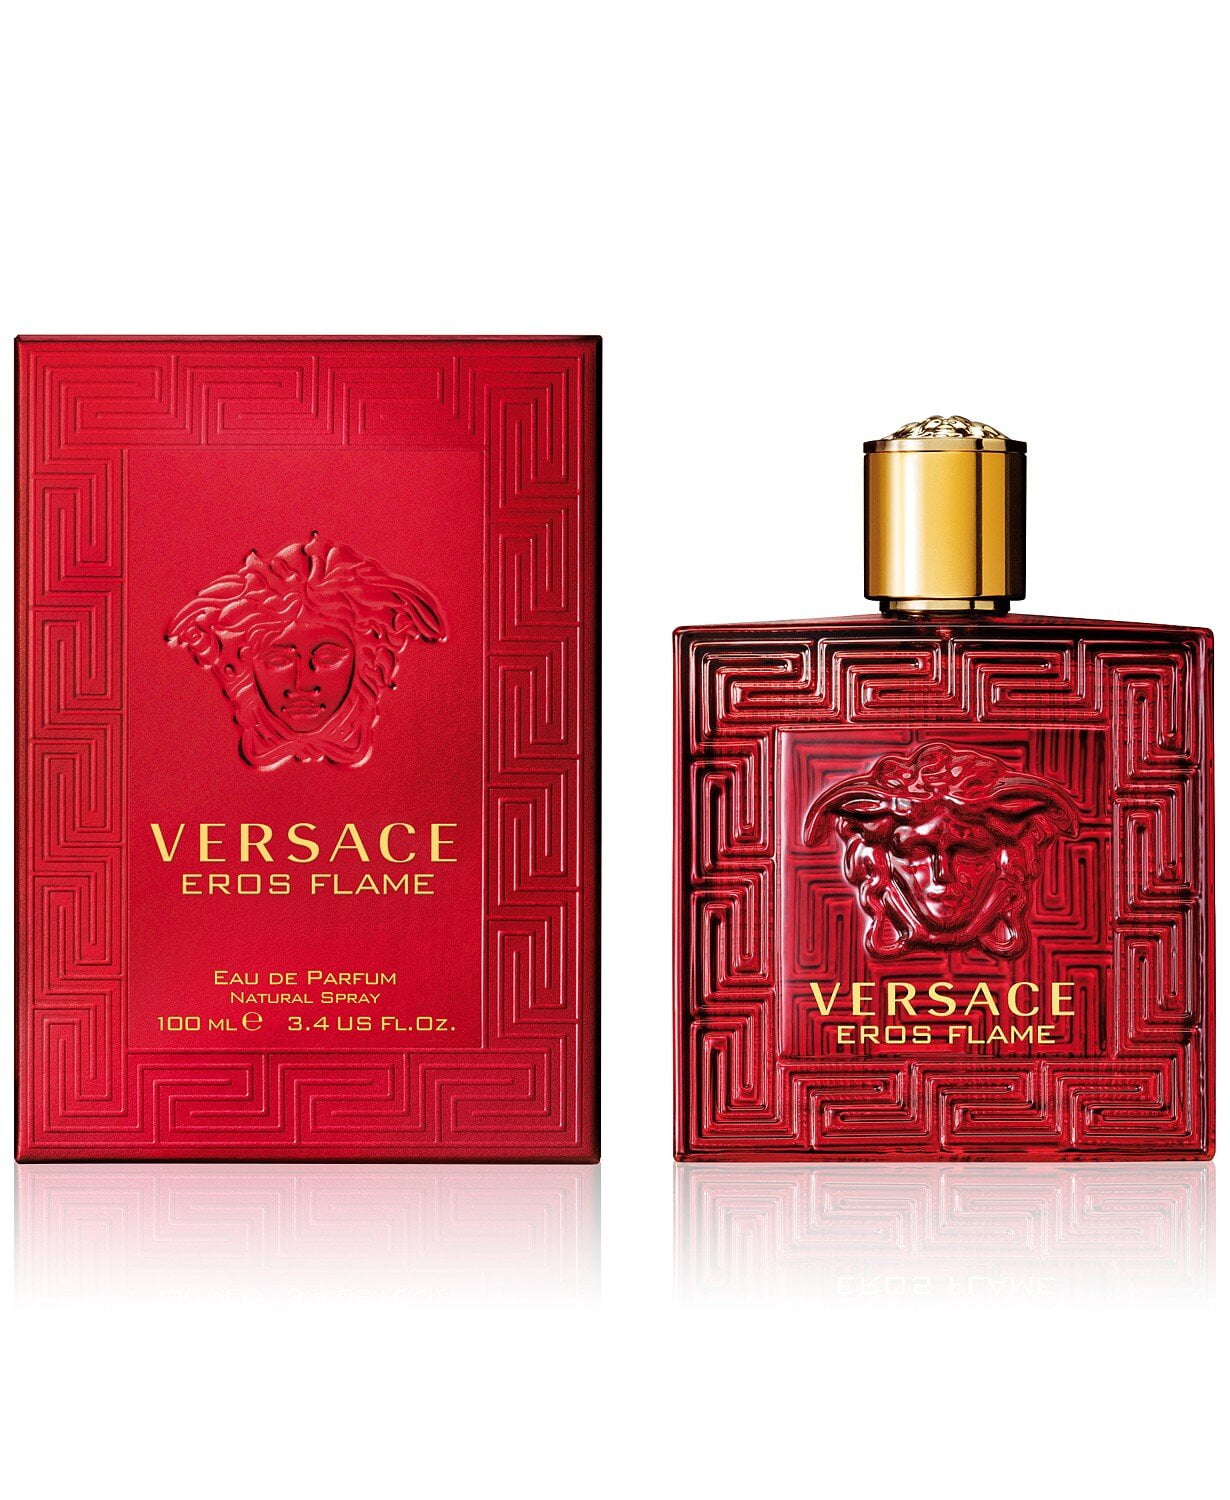 Versace Eros Flame Eau De Parfum for 